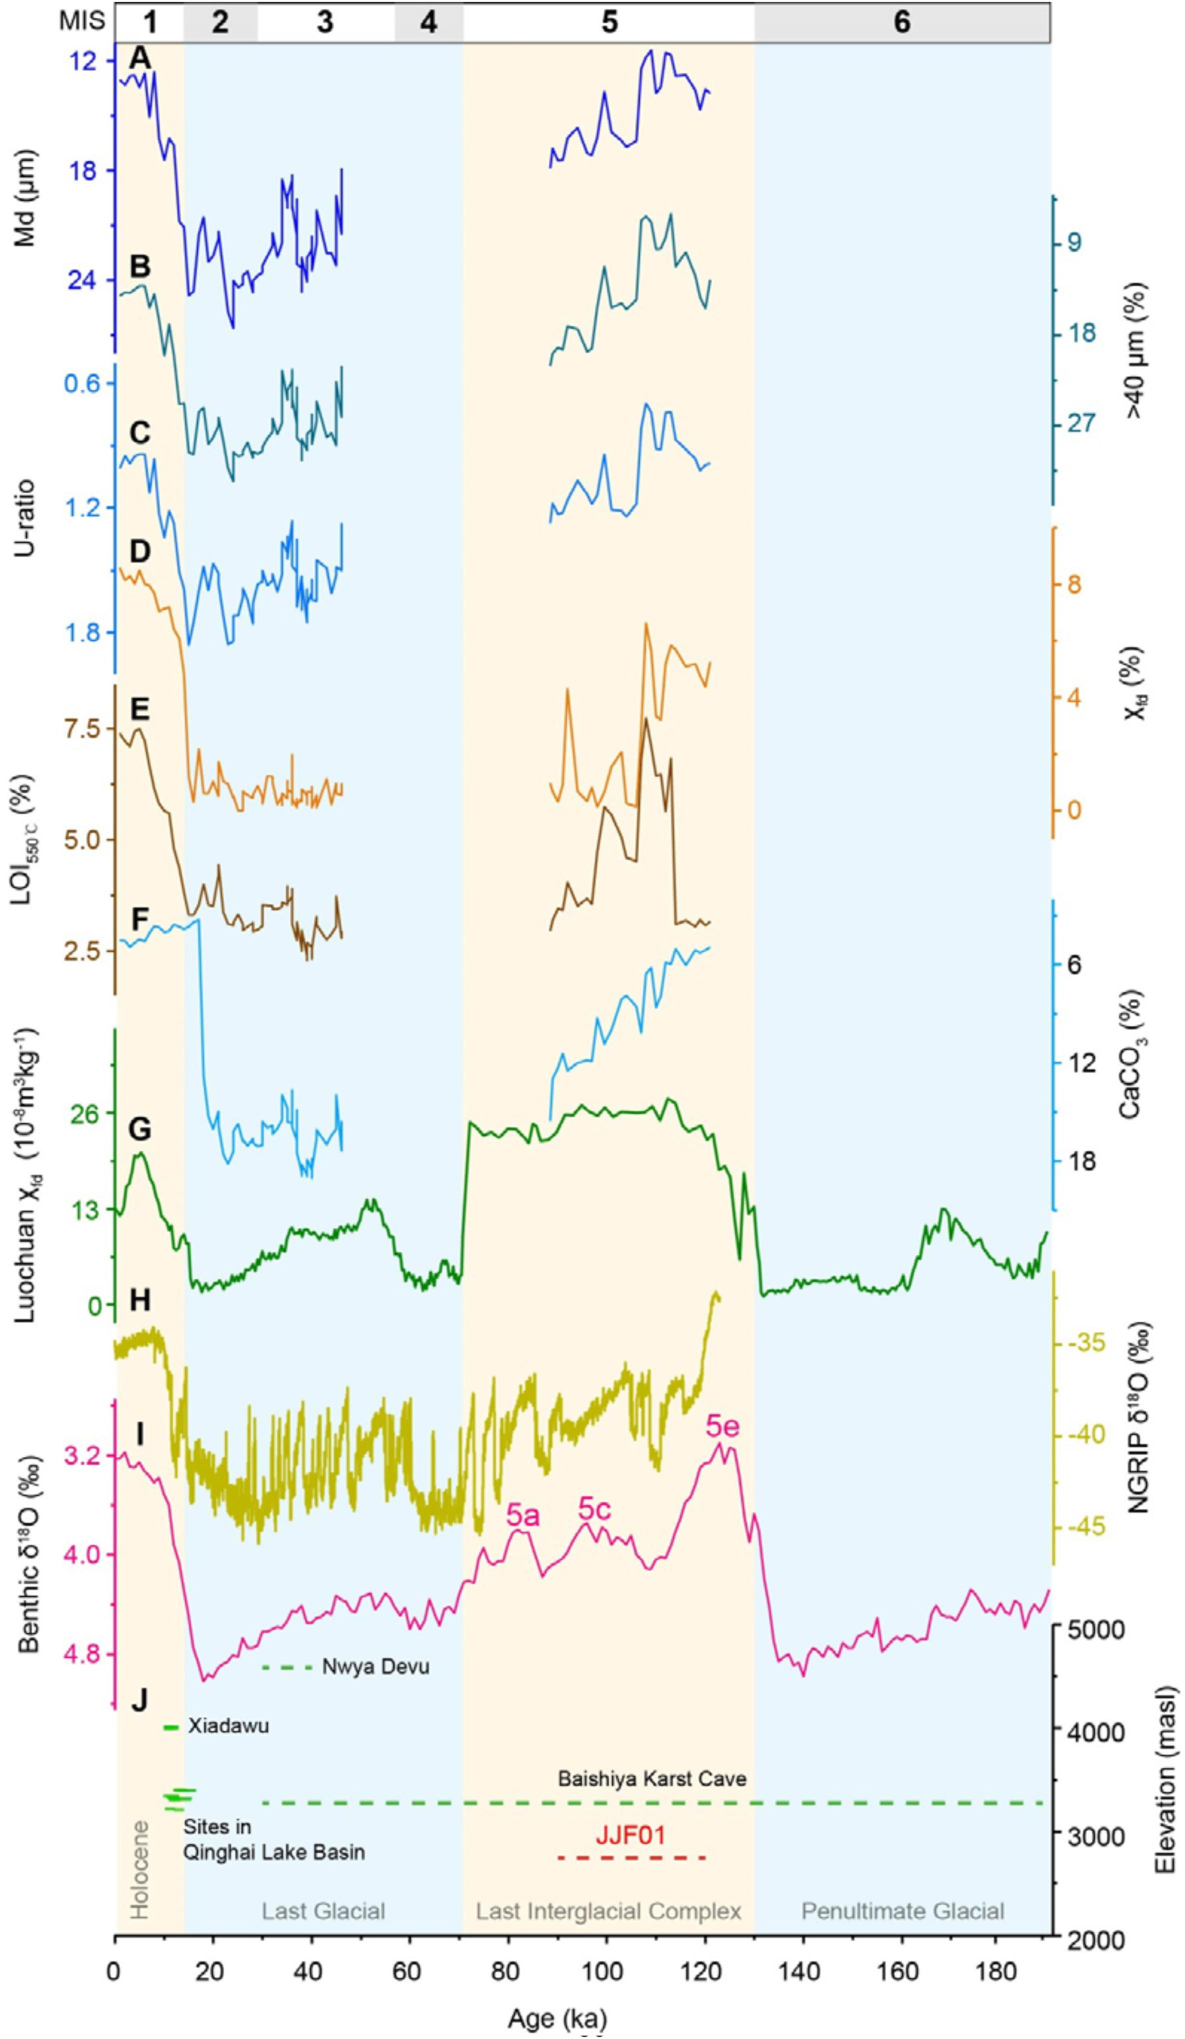 PALEOENVIRONMENTAL data of human activity period at zijunbu site in the northeast of Qinghai Xizang Plateau